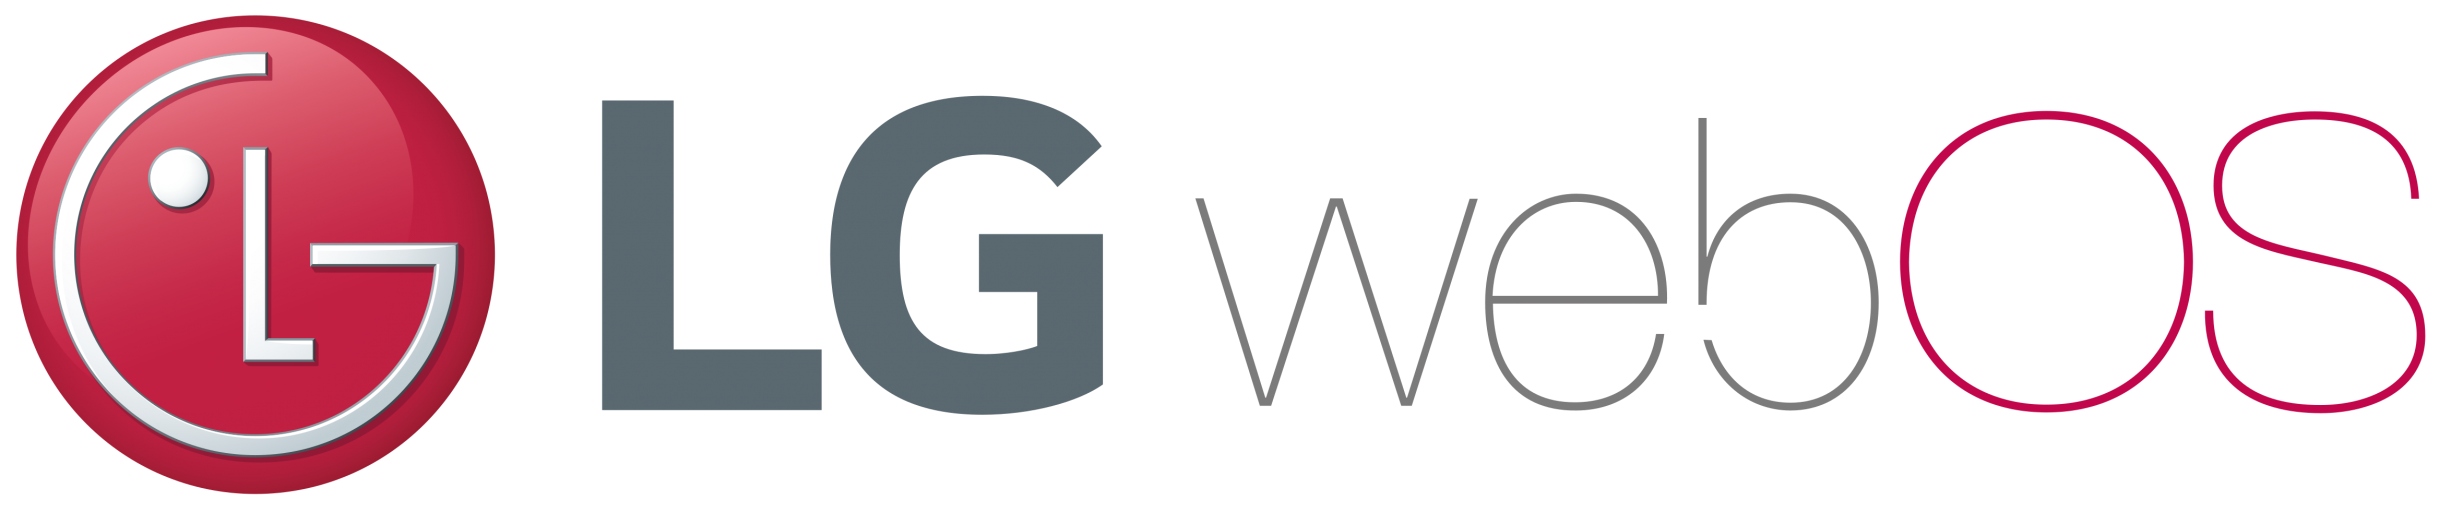 WEBOS логотип. Логотип LG смарт ТВ. LG Smart TV прозрачный логотип. LG телевизоры лого.